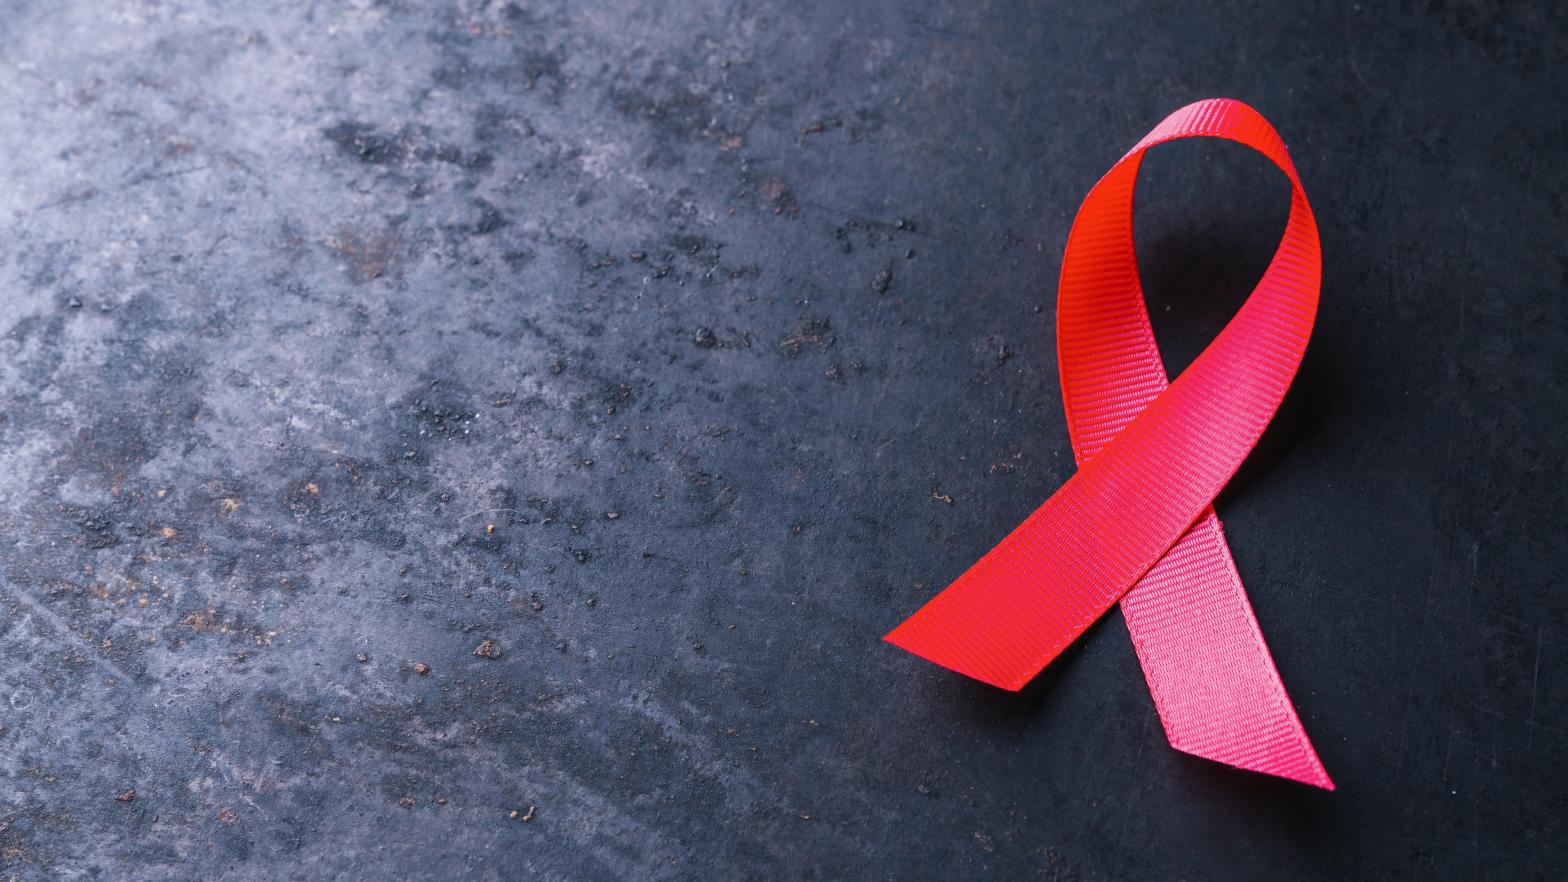 Above, a red AIDS awareness ribbon. (Image: Shutterstock, Shutterstock)